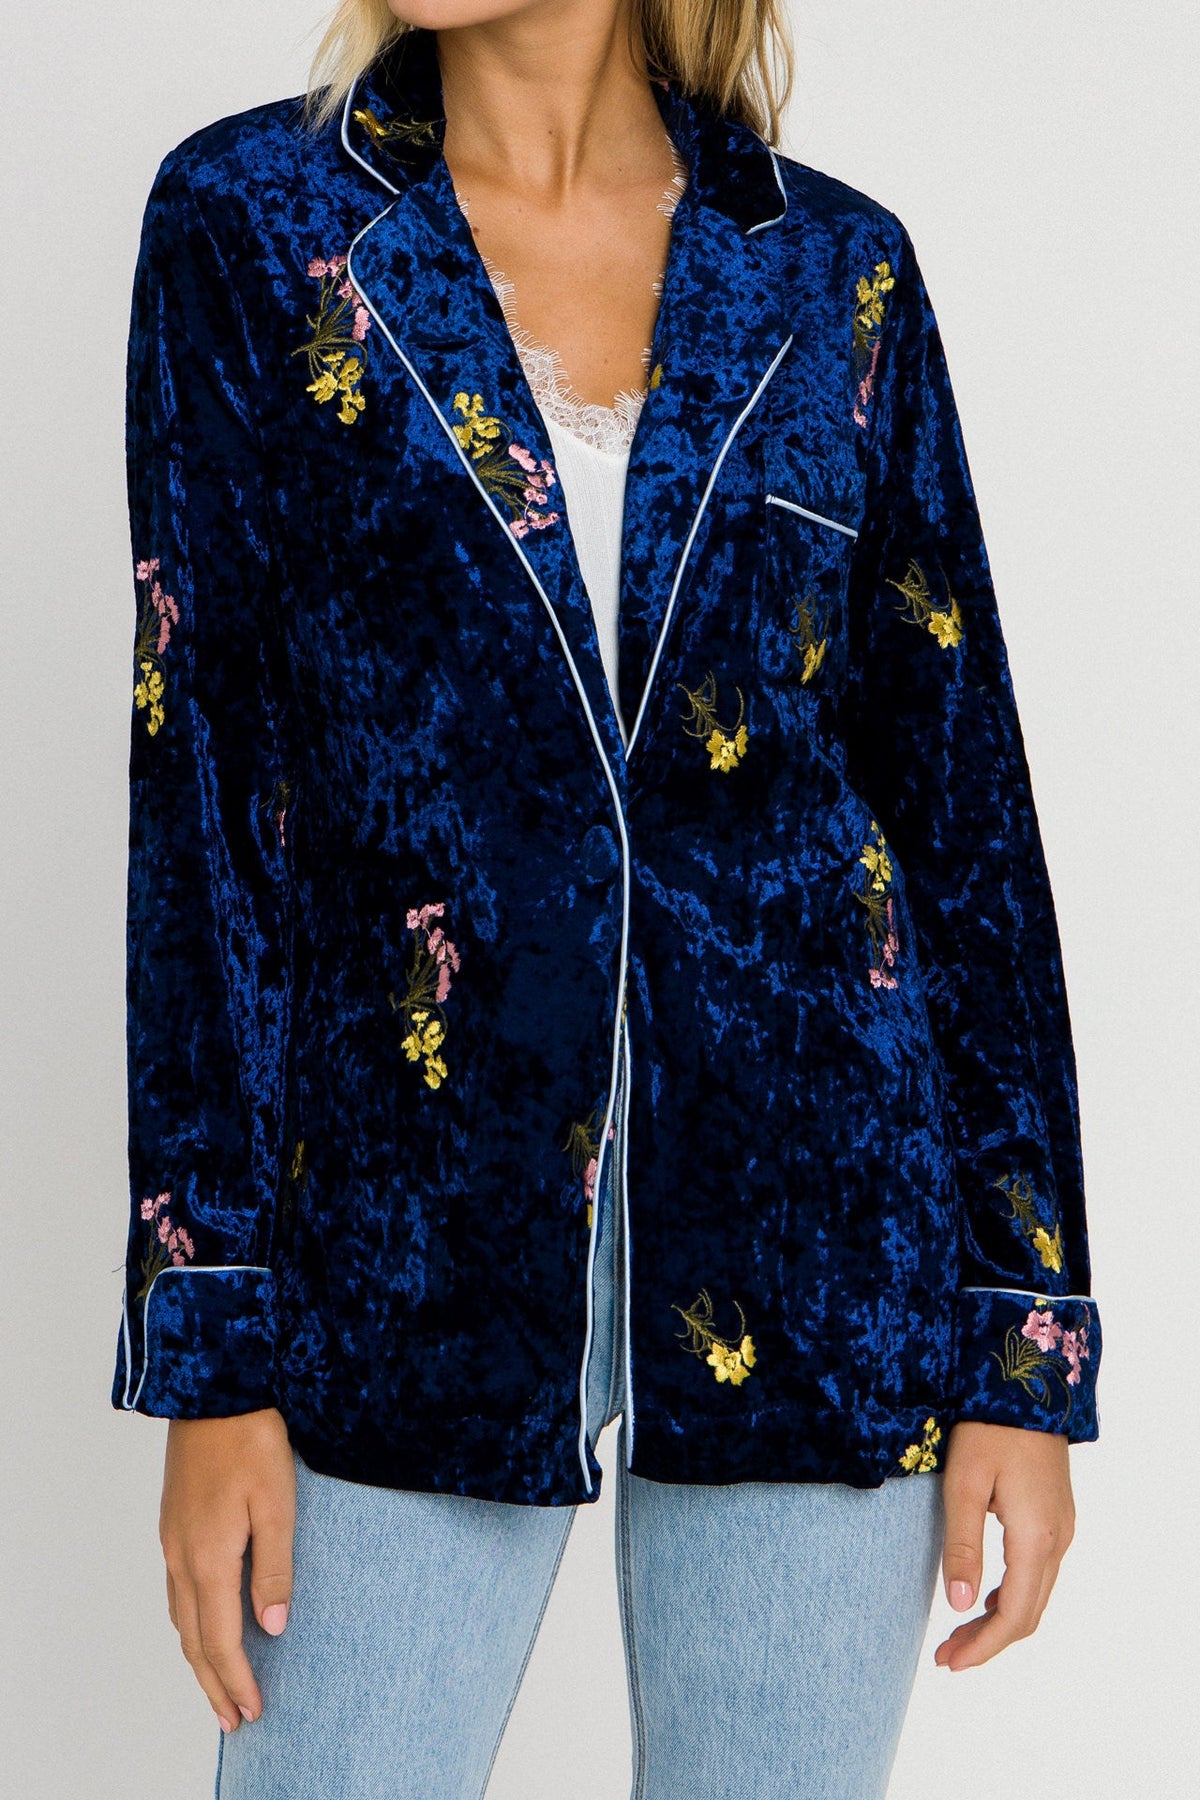 ENDLESS ROSE - Velvet Pajama Jacket - JACKETS available at Objectrare